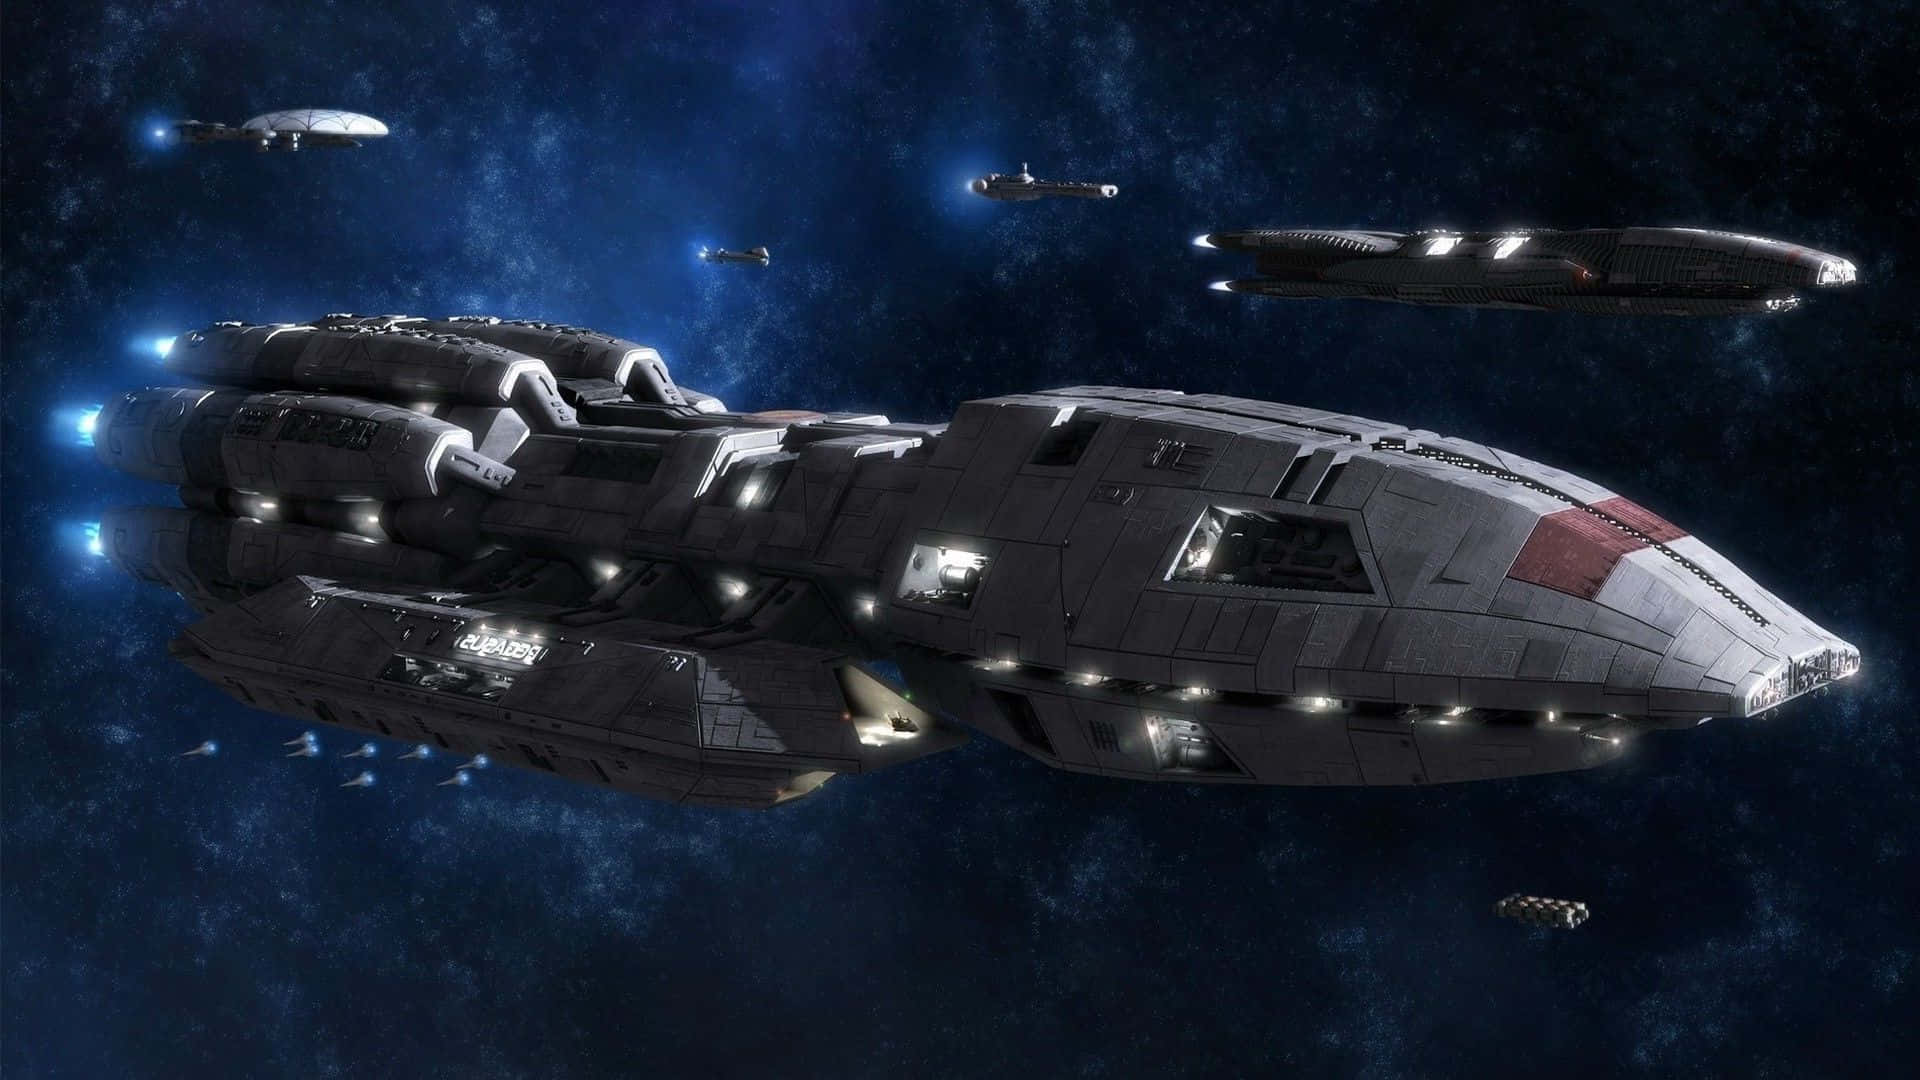 battlestar galactica ship wallpaper